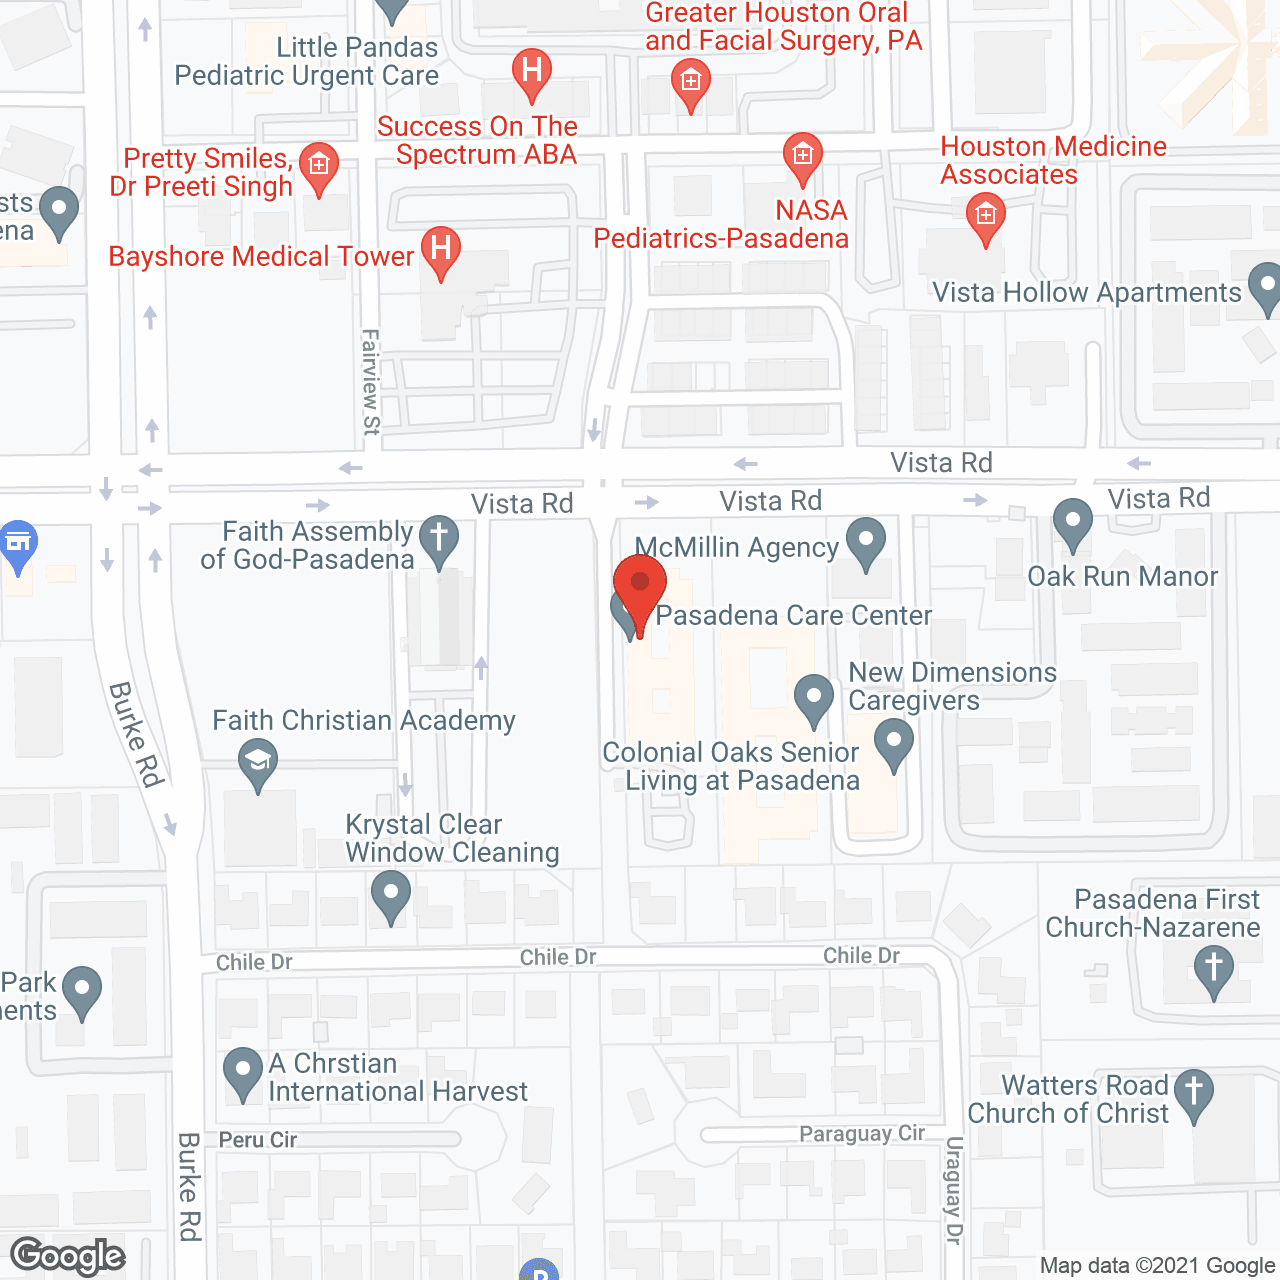 Pasadena Care Center in google map